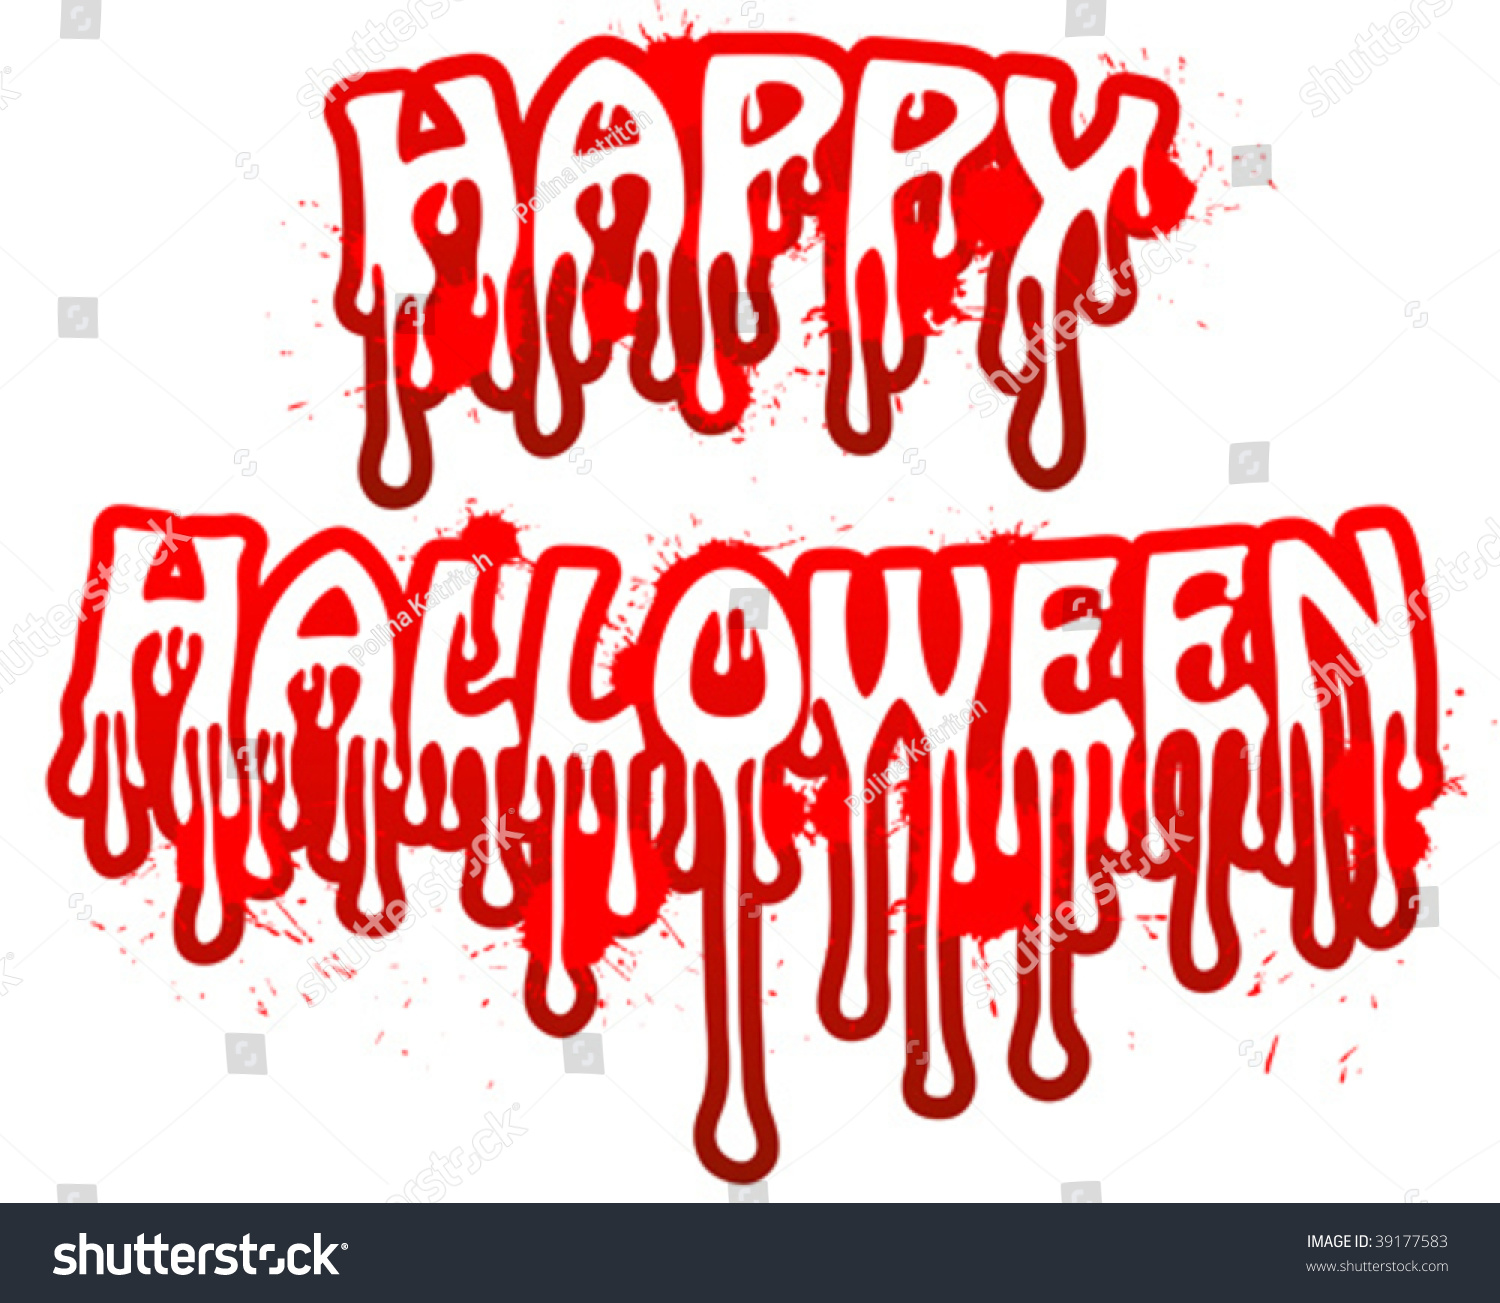 Halloween Vector Bloody Text. - 39177583 : Shutterstock